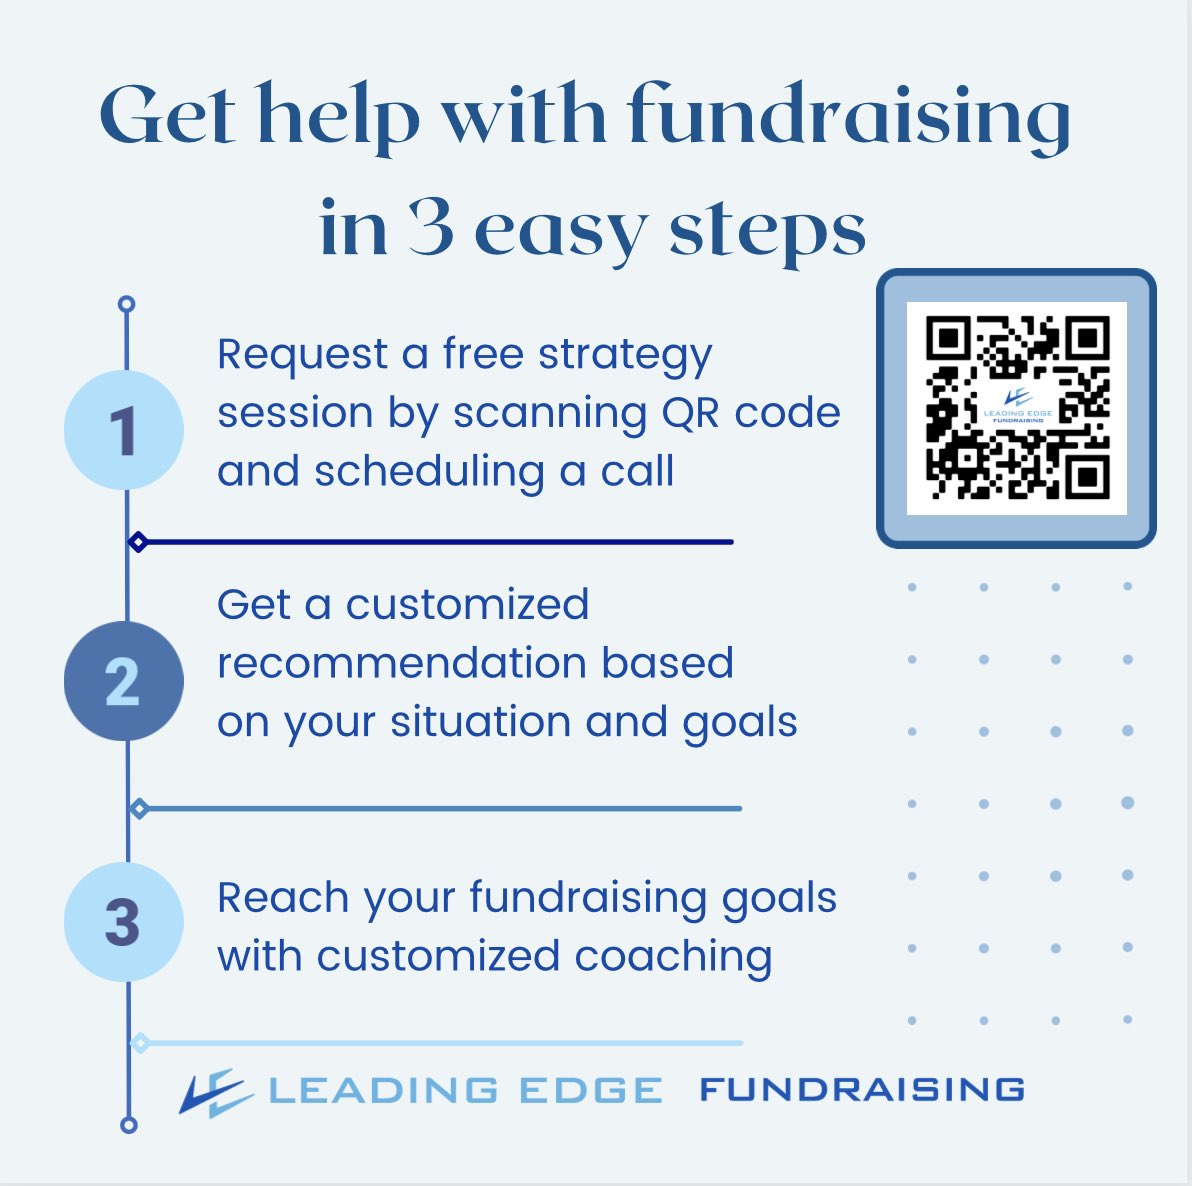 Fundraising has never been easier. ⁣Let us help you reach your goals. ⁣
#leadingedge #leadingedgefundraising #nevadafundraiser